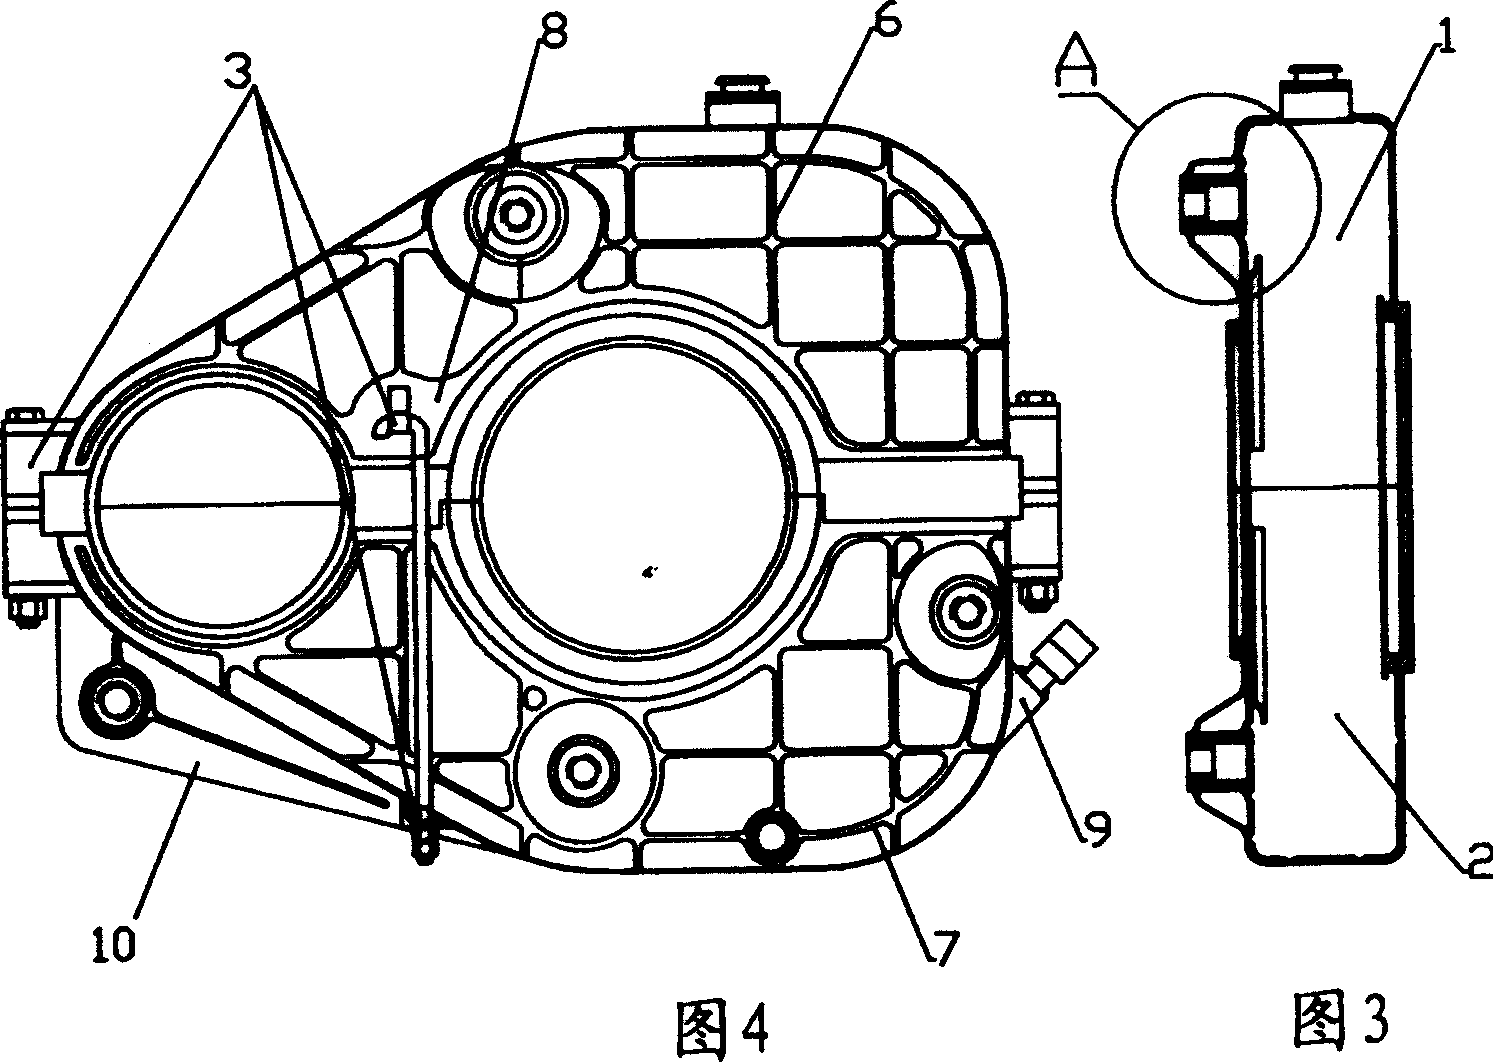 Locomotive gear wheel box and its production method